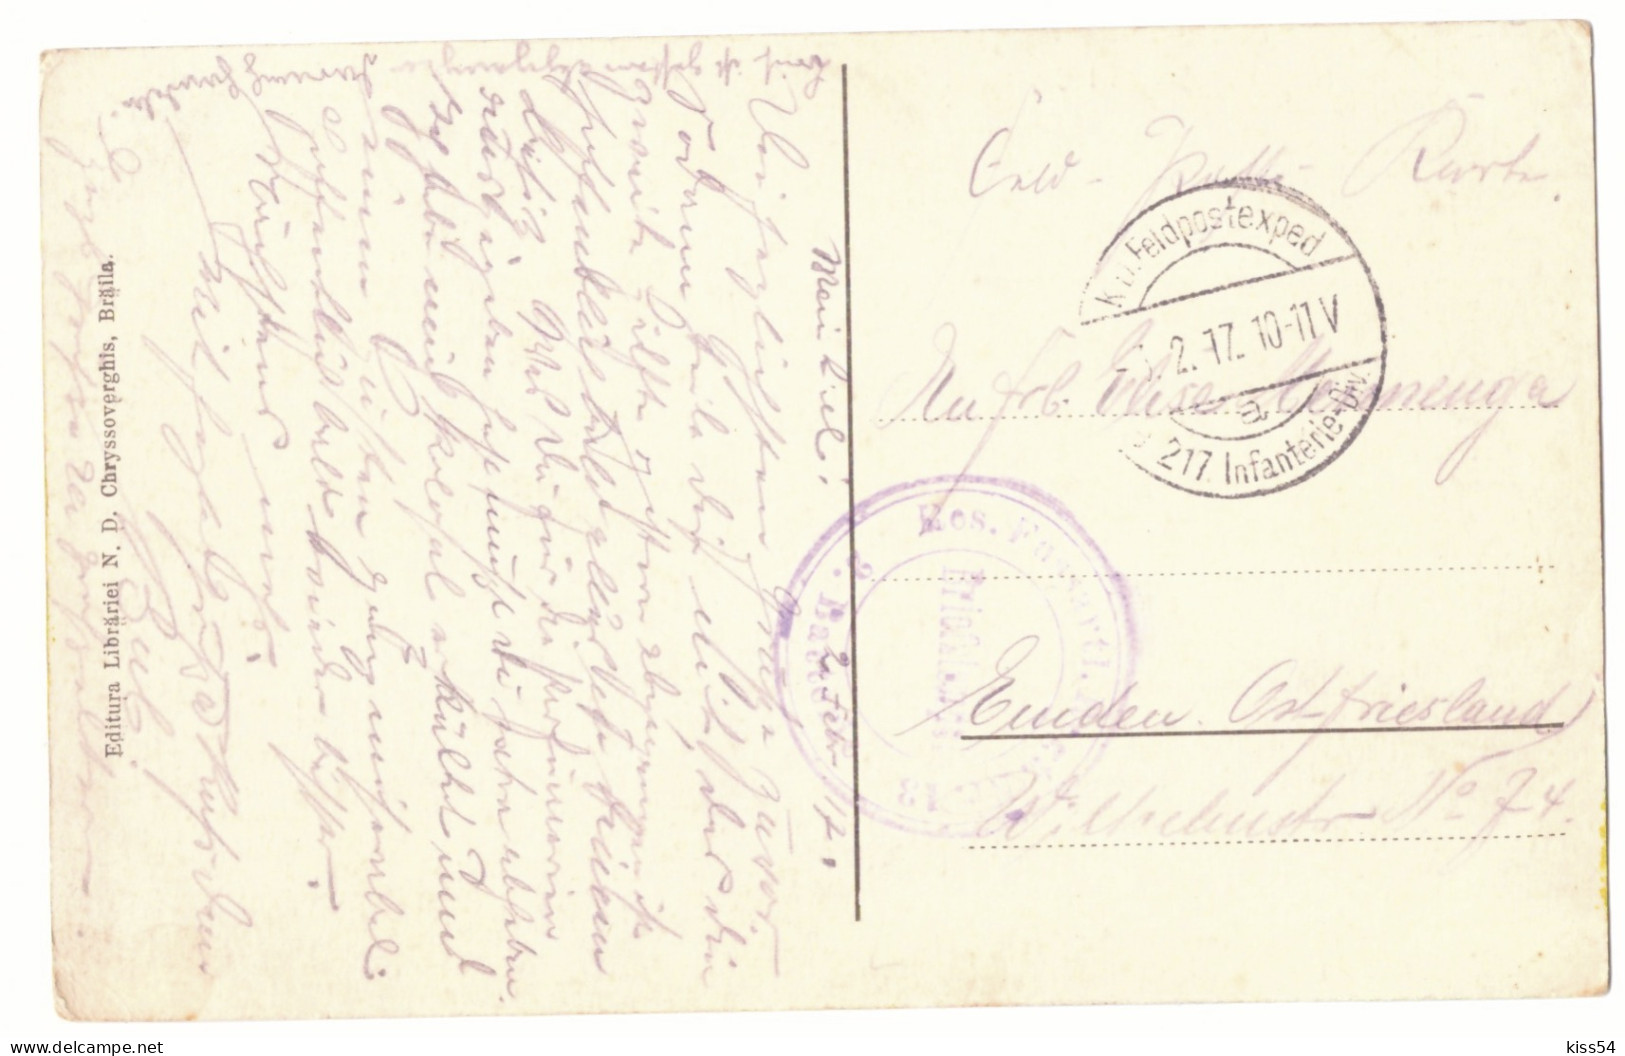 RO 40 - 21163 LACUL SARAT, Braila, Romania - Old Postcard, CENSOR - Used - 1917 - Roumanie